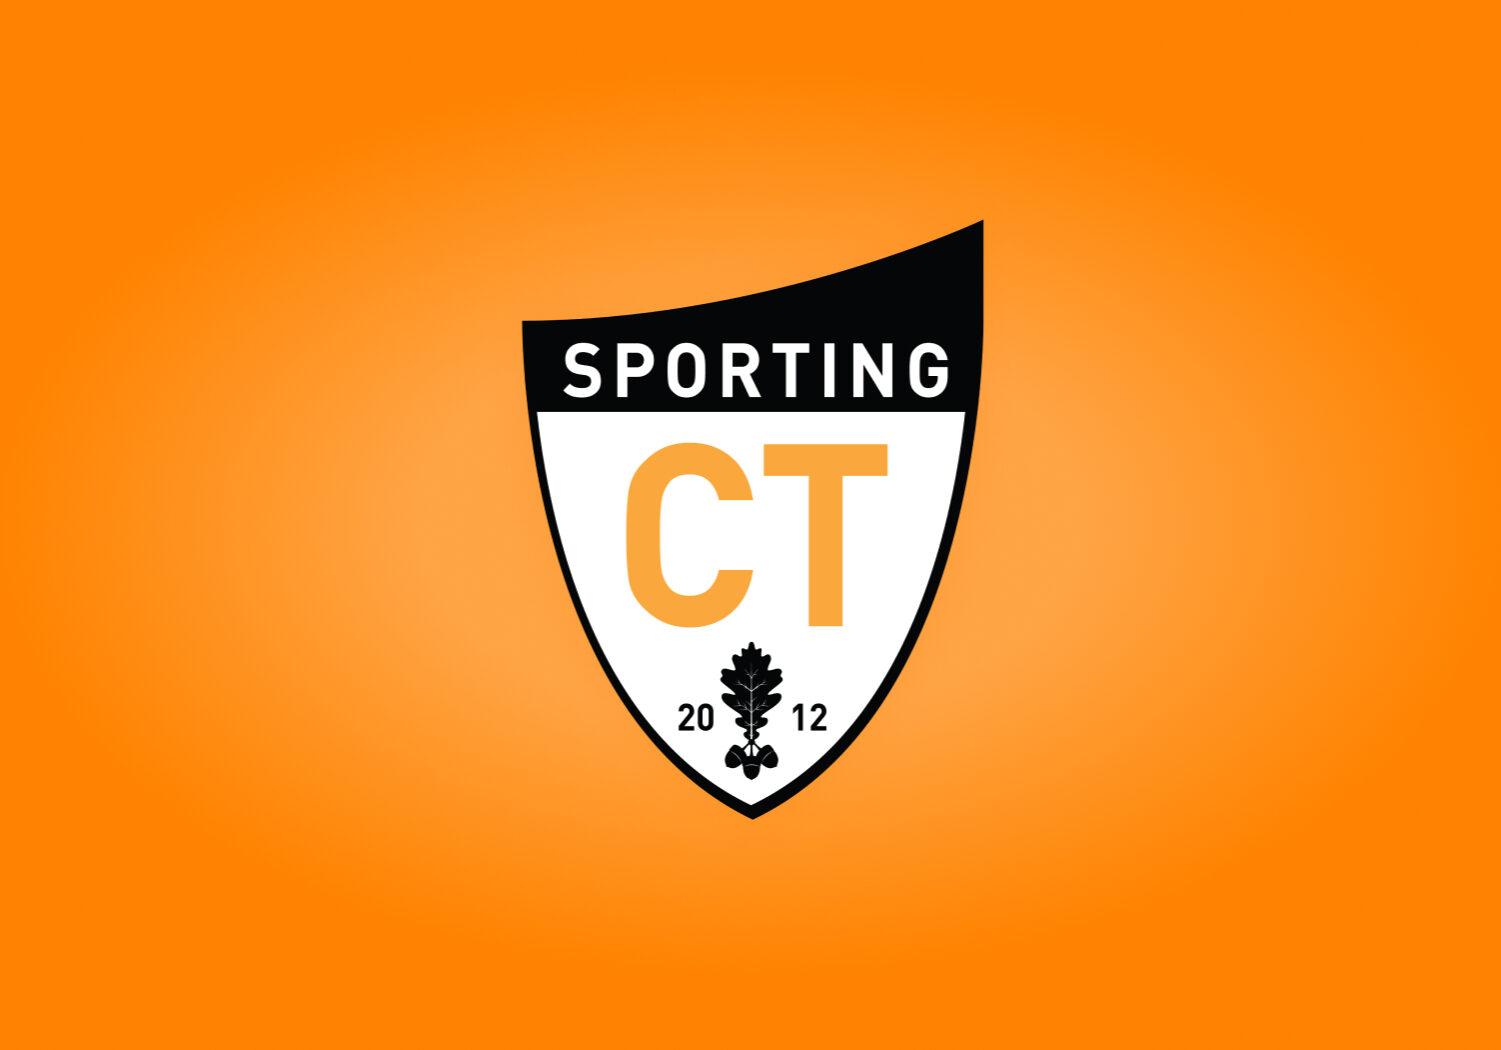 Sporting CT - Orange Background